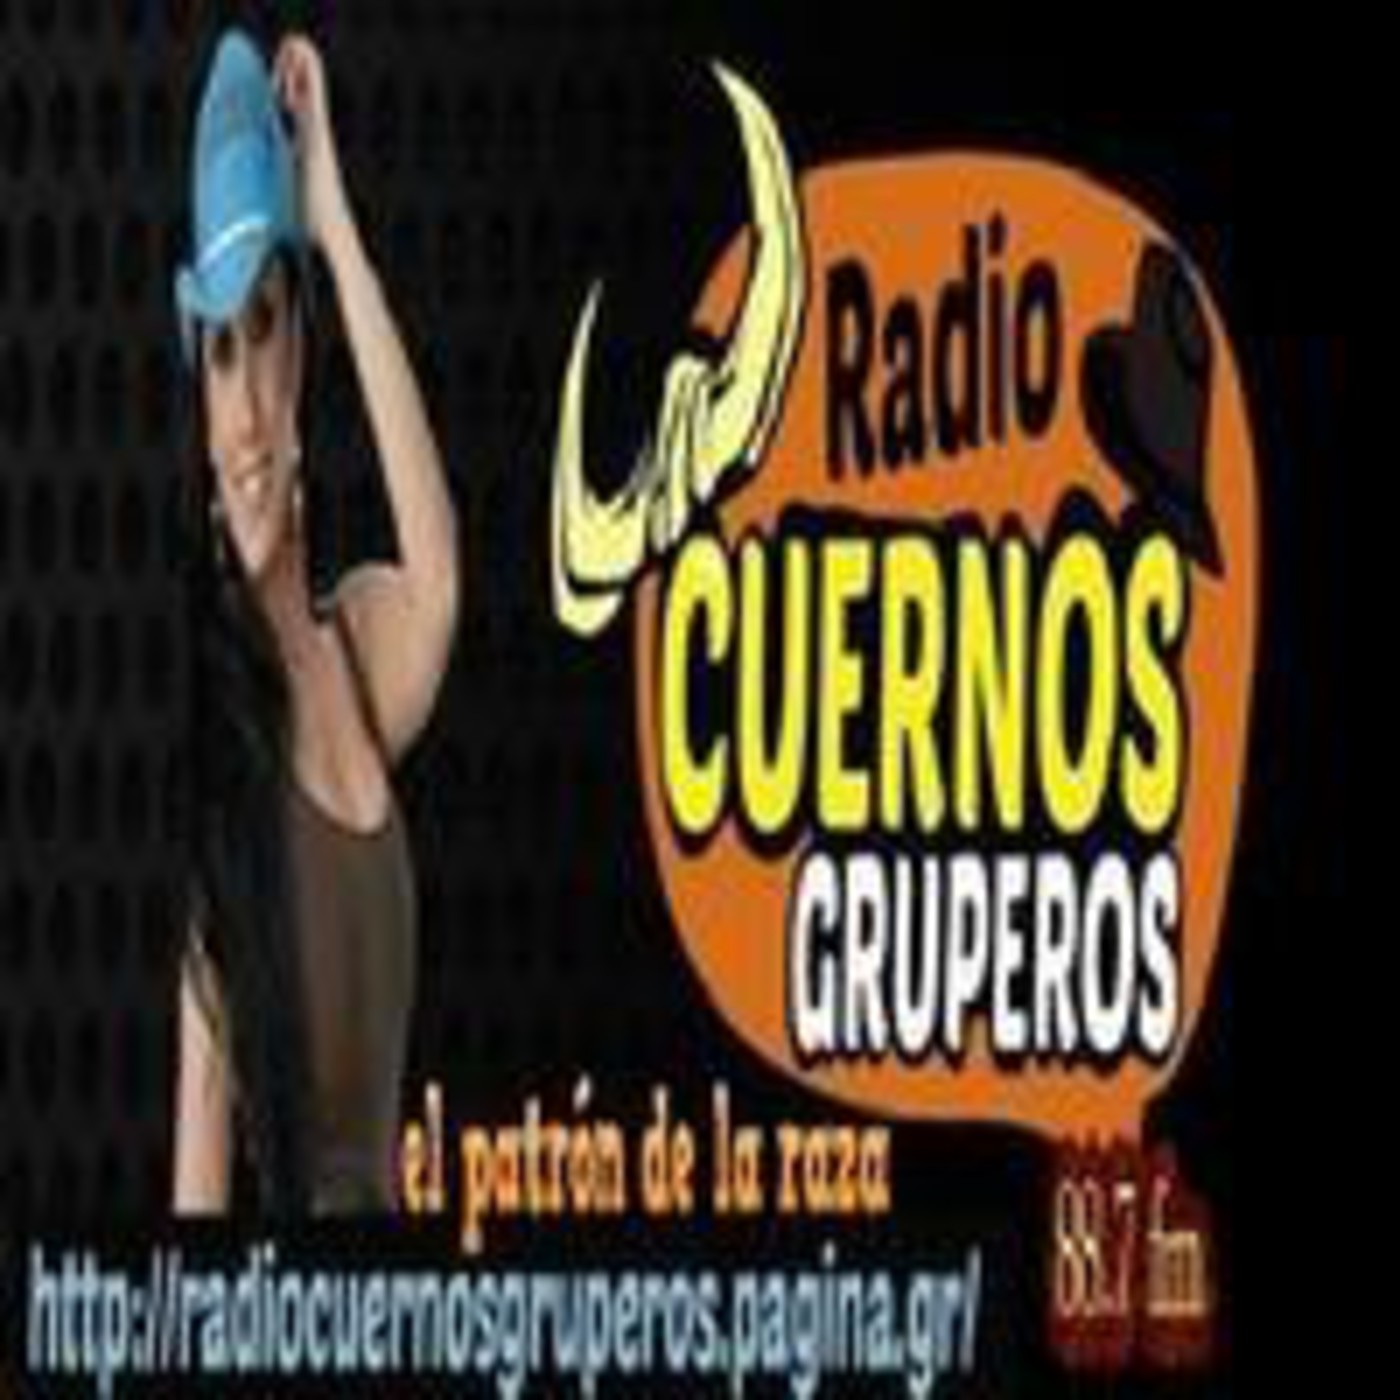 Podcast de El Comander Grupero:El Comander Grupero